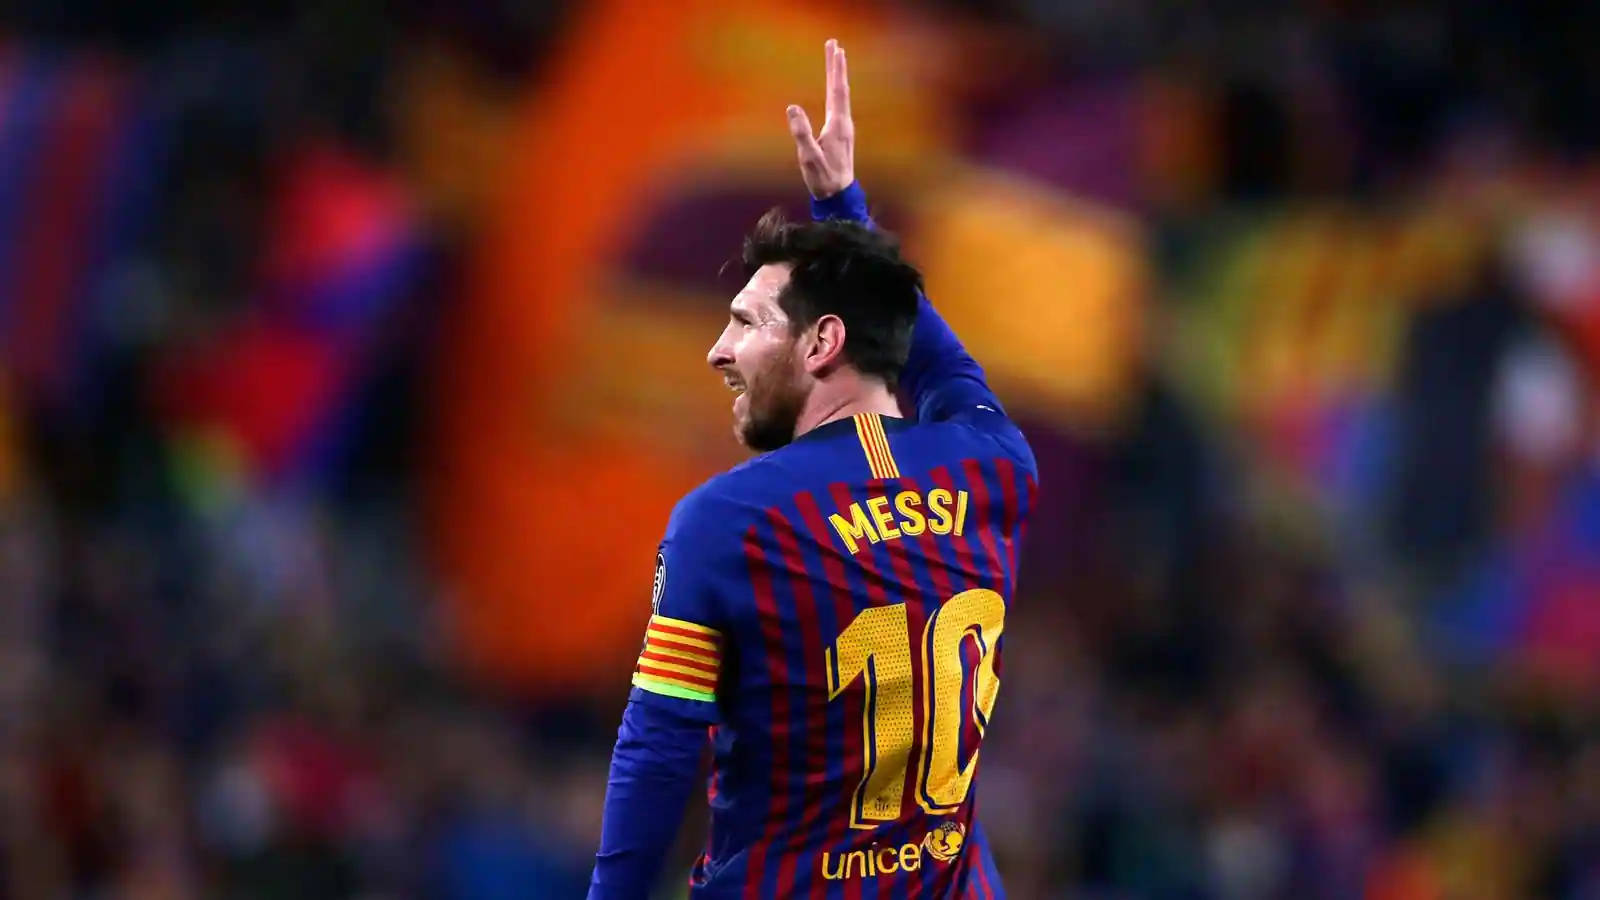 Messi 2021 Hand Up Wallpaper